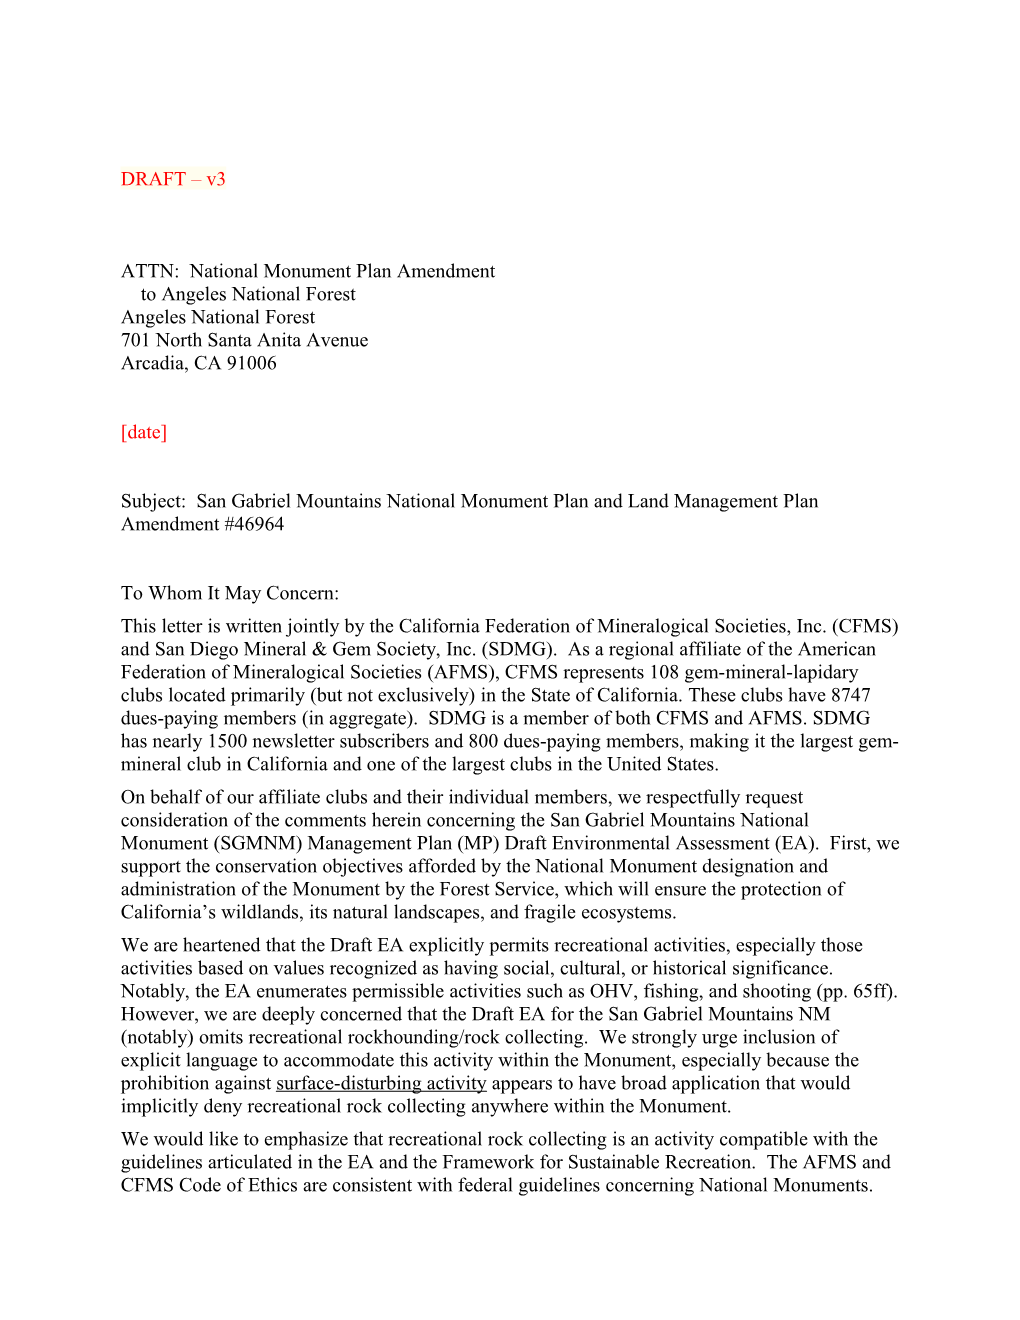 ATTN: National Monument Plan Amendment